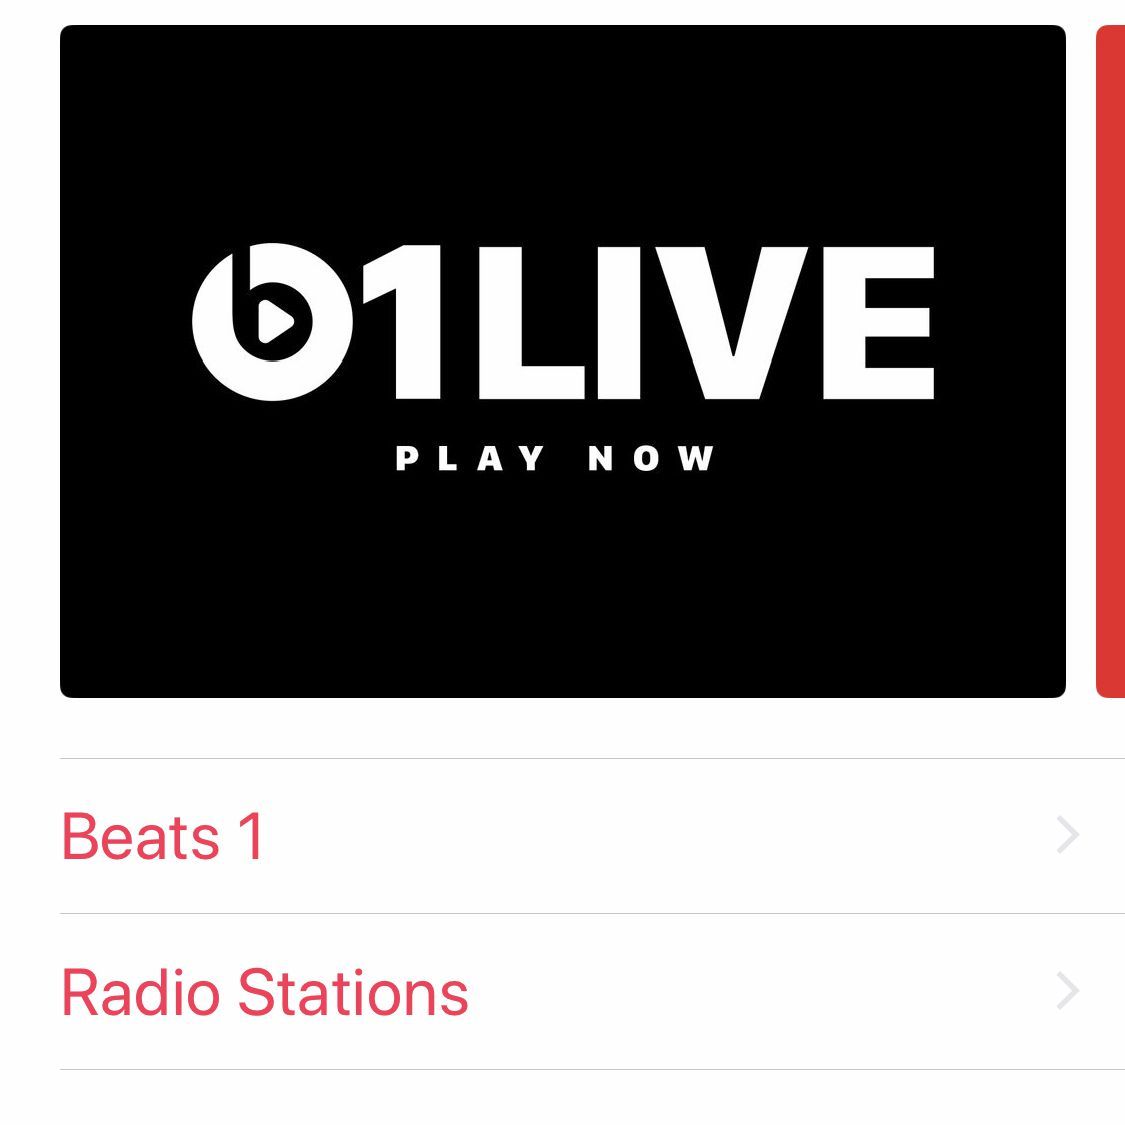 Снимок экрана параметров радио в Apple Music на iPhone